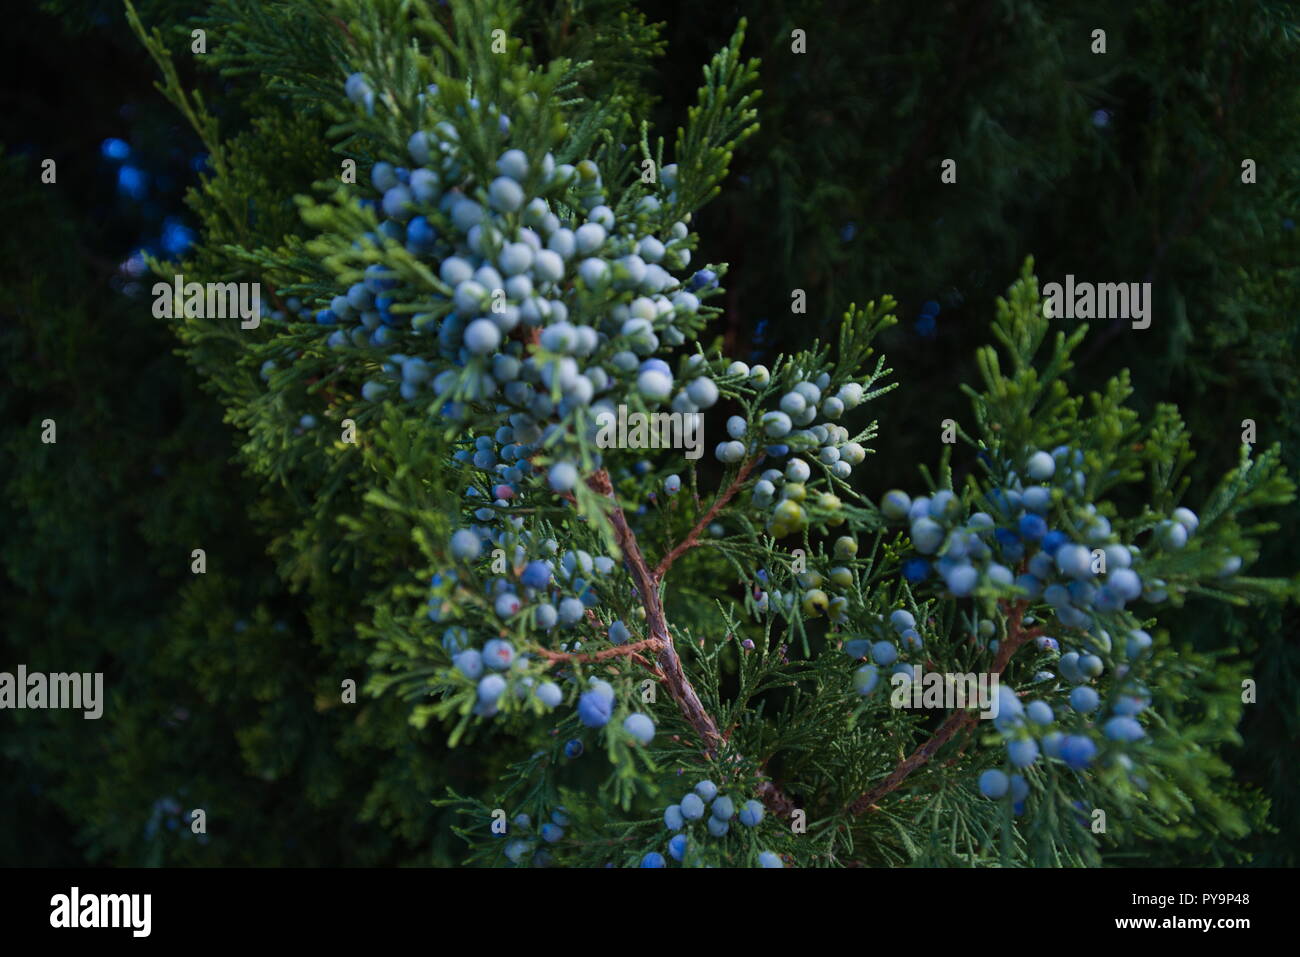 Wacholderbeeren pflanze -Fotos und -Bildmaterial in hoher Auflösung – Alamy